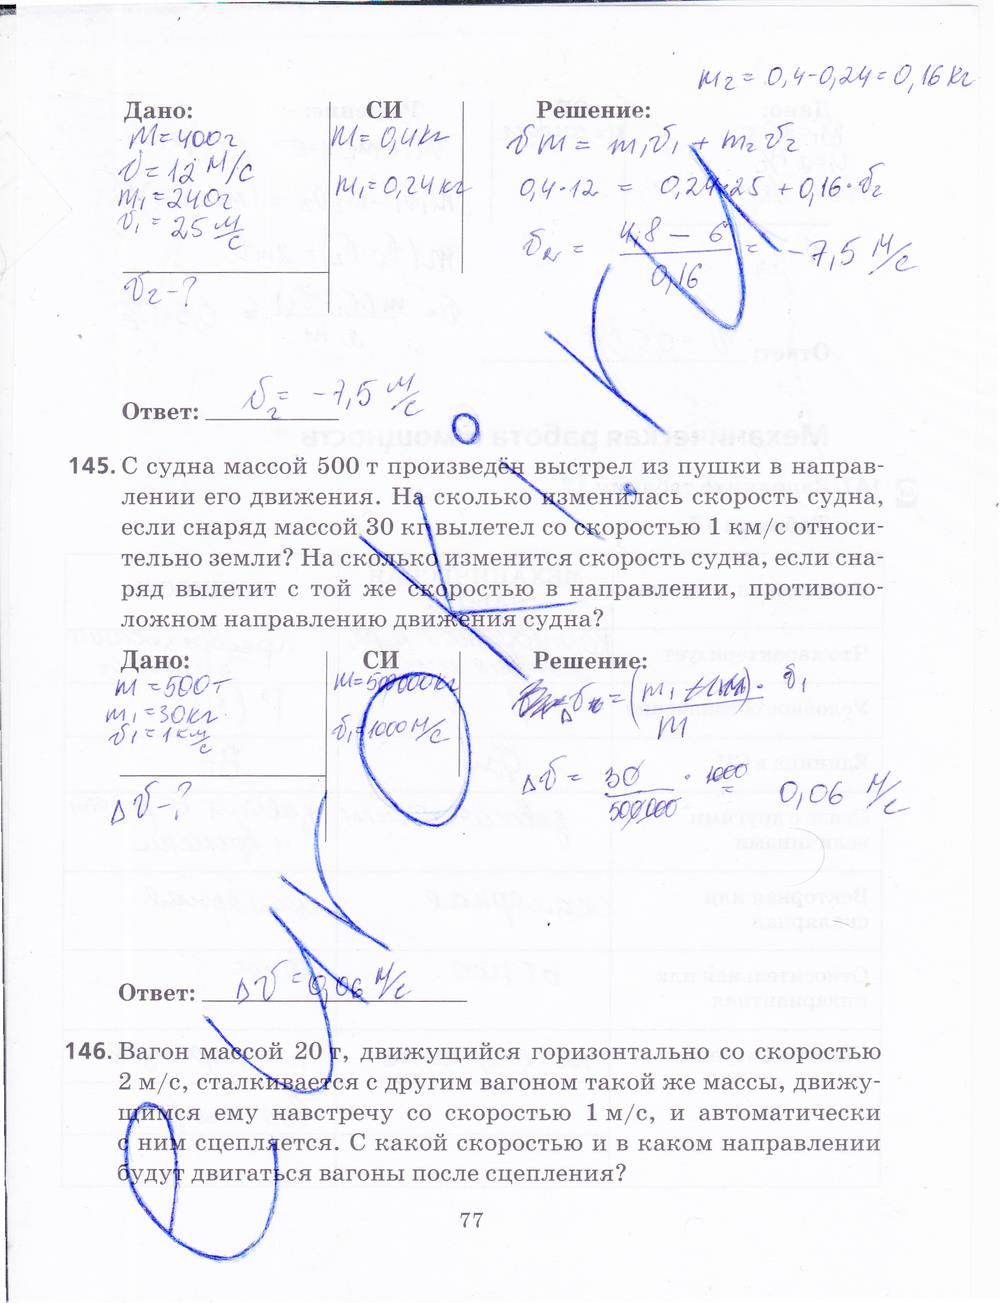 гдз 9 класс рабочая тетрадь страница 77 физика Пурышева, Важеевская, Чаругин